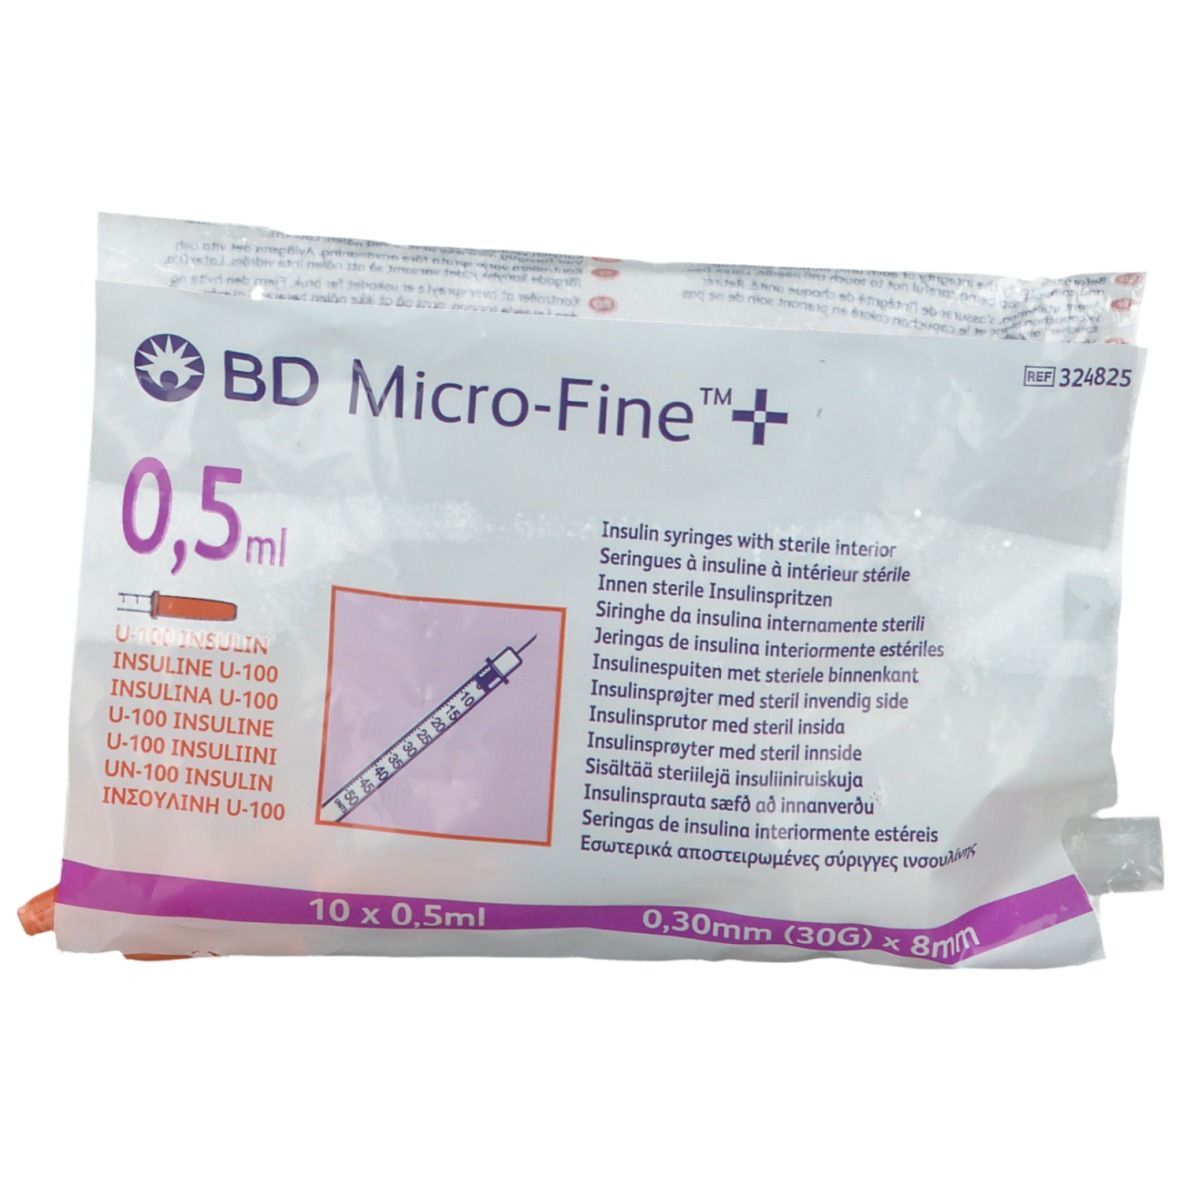 BD Micro-Fine + 0,5 ml